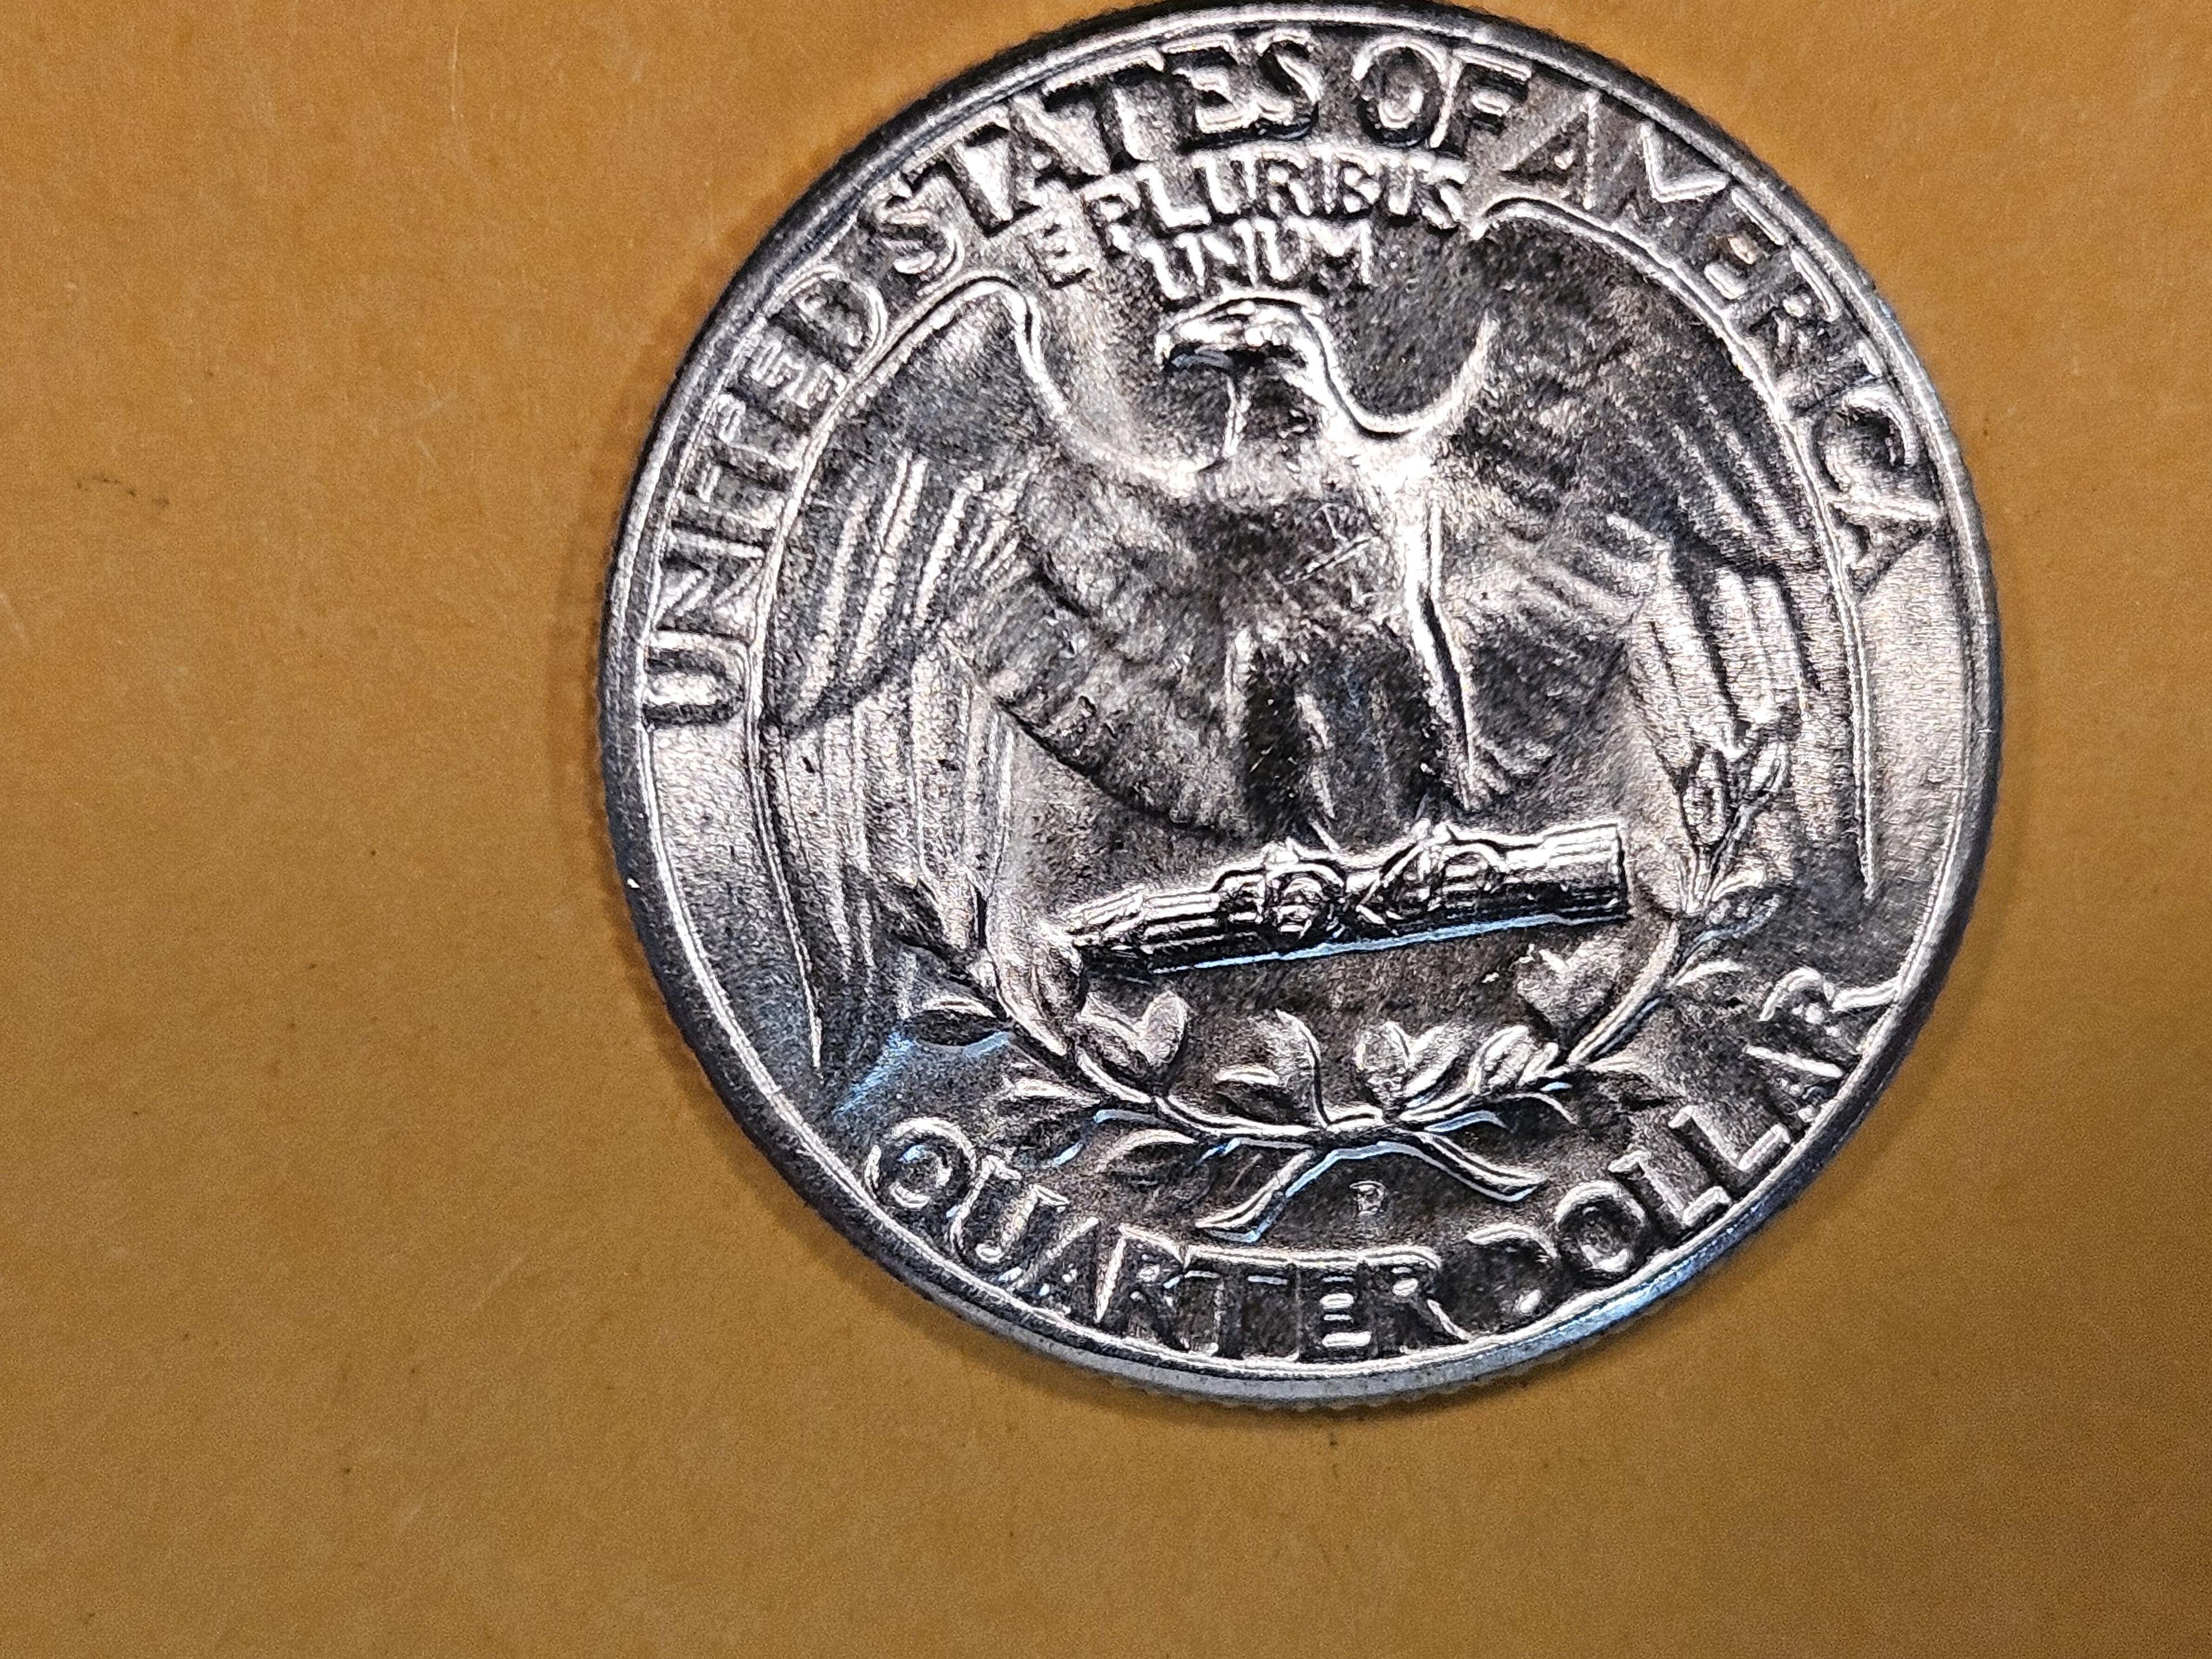 1947-D Washington silver Quarter